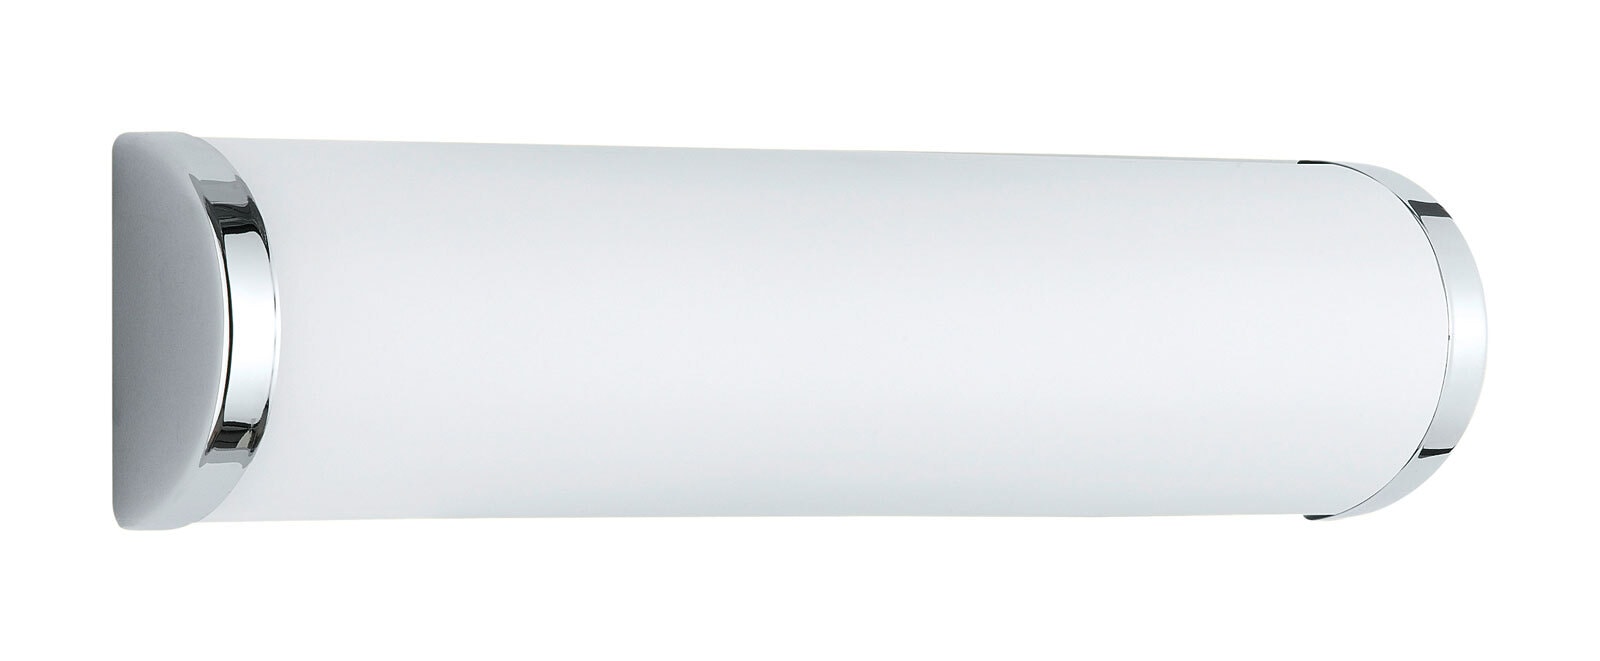 TRIO LED Wandlampe XAVI 30 cm chromfarbig